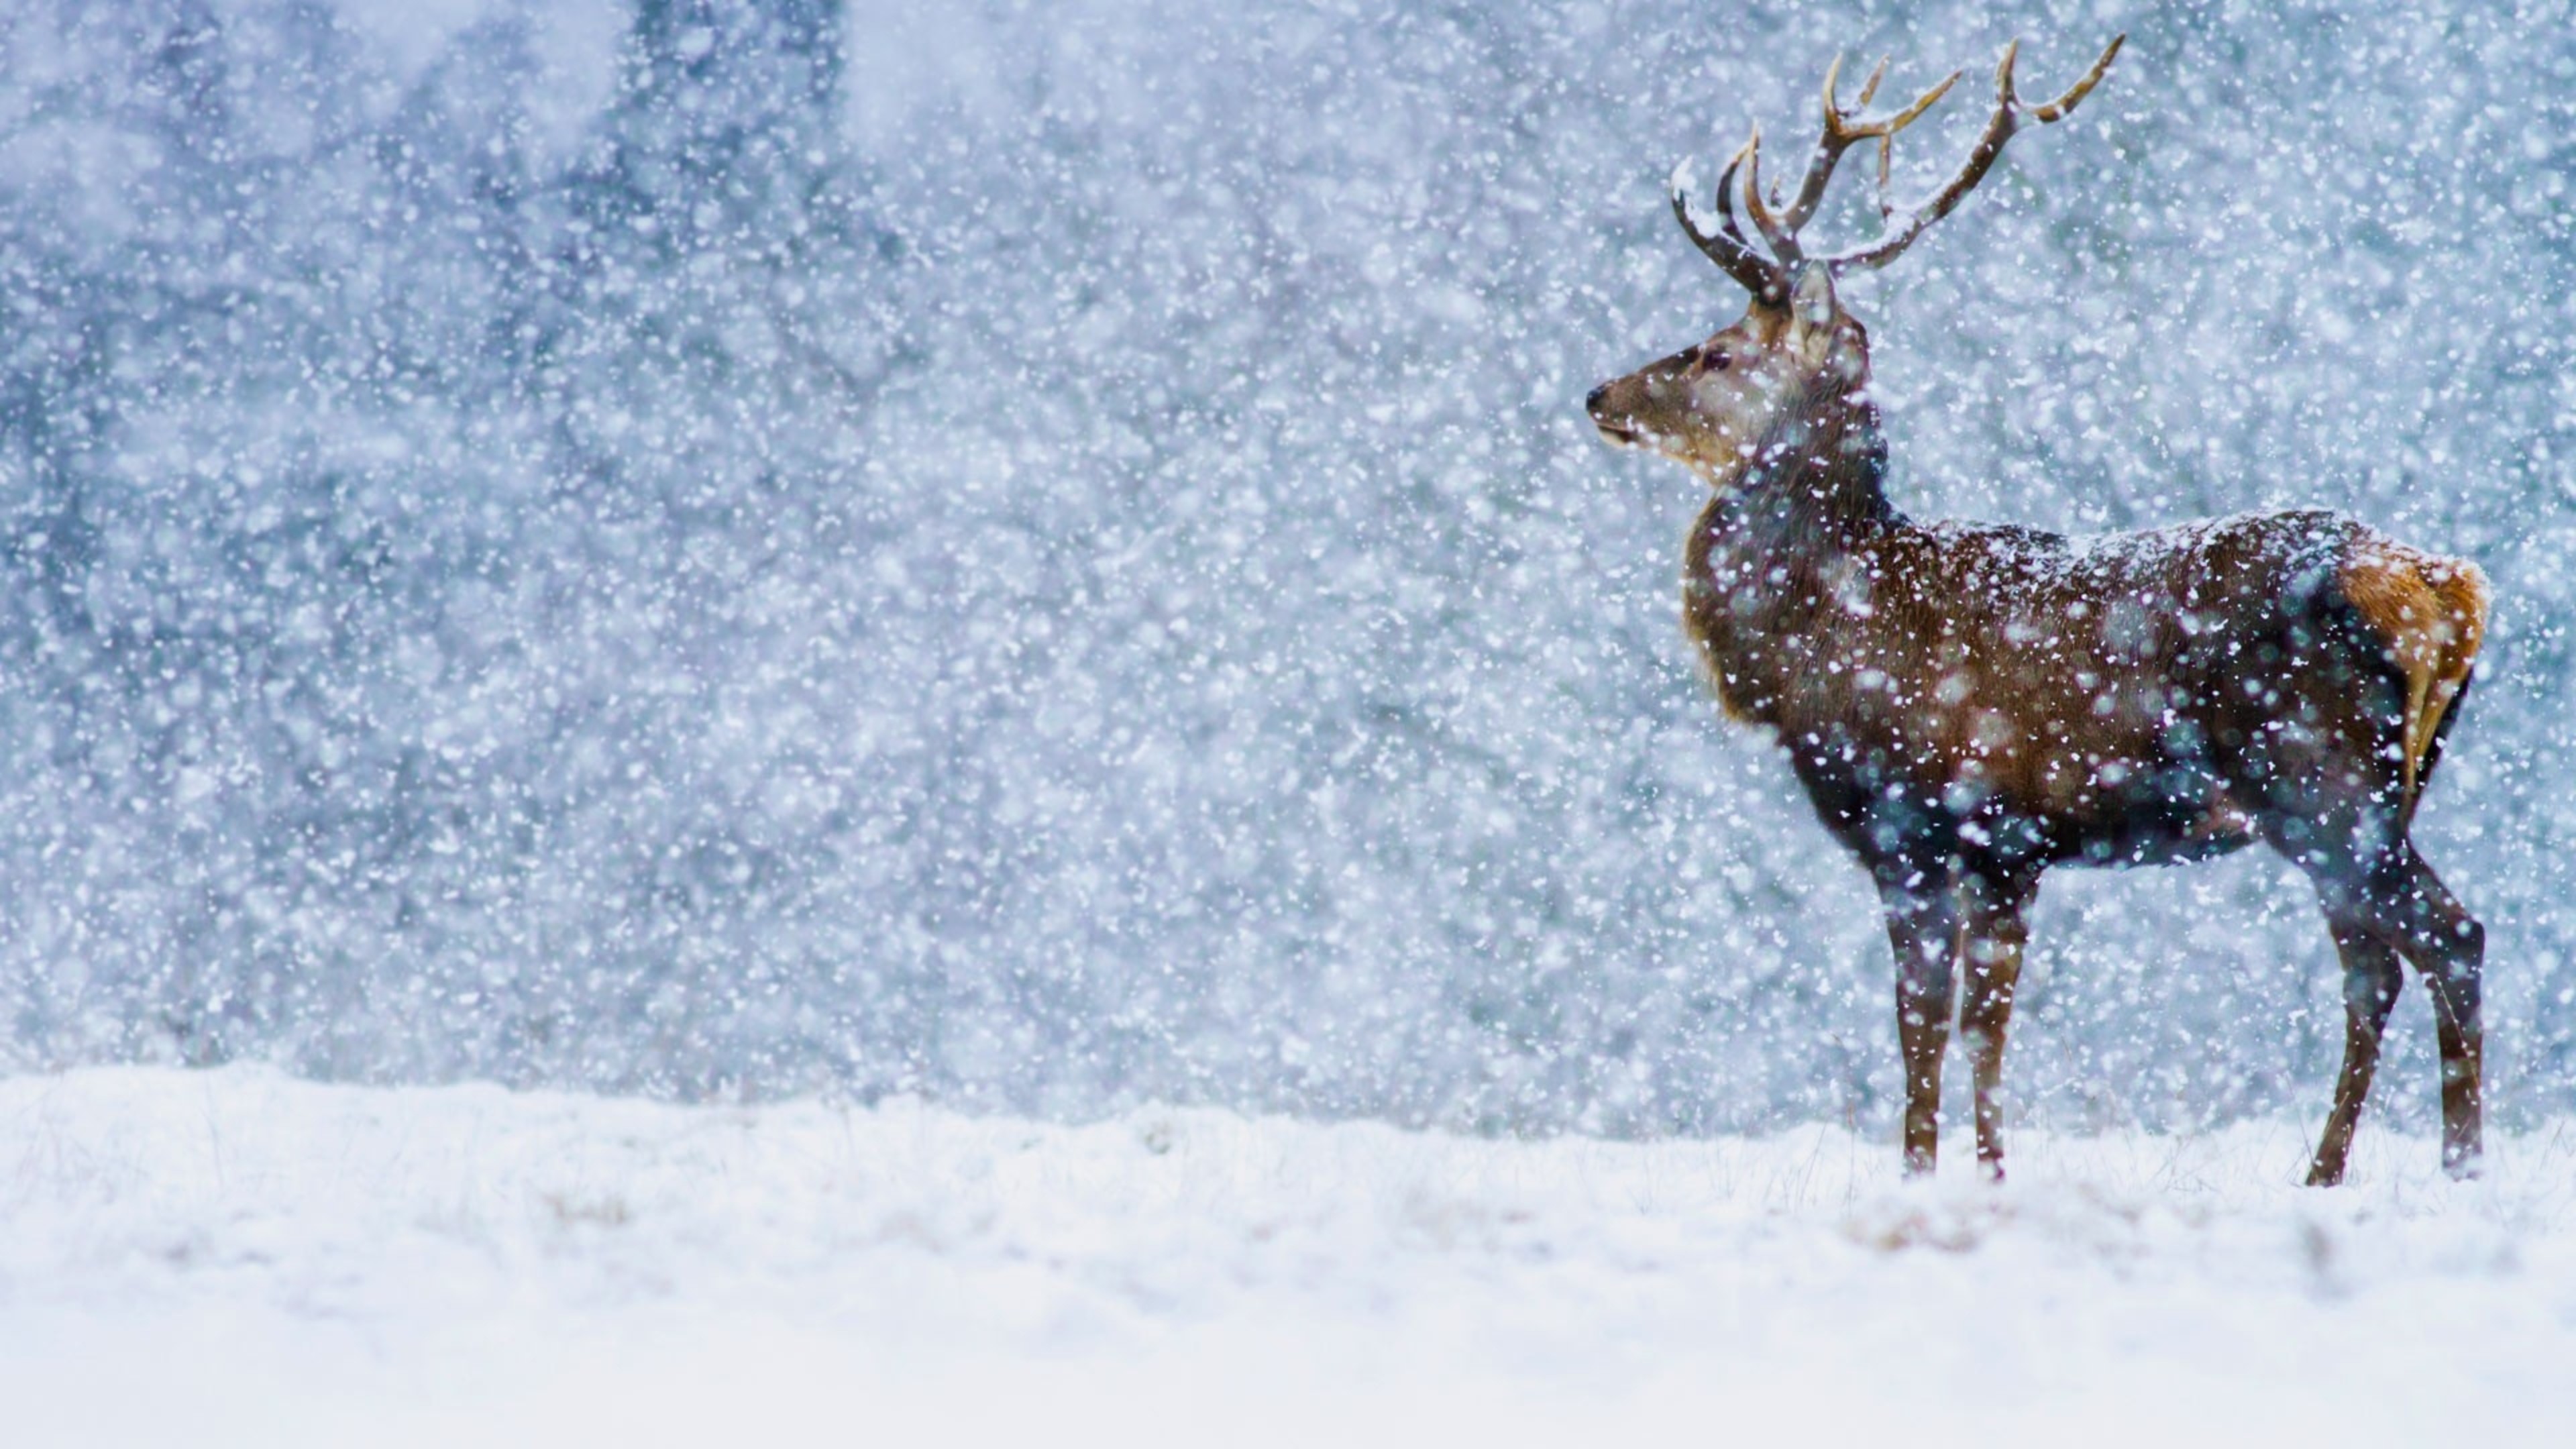 Wonderful snow in the winter season - Wild deer in nature Wallpaper ...